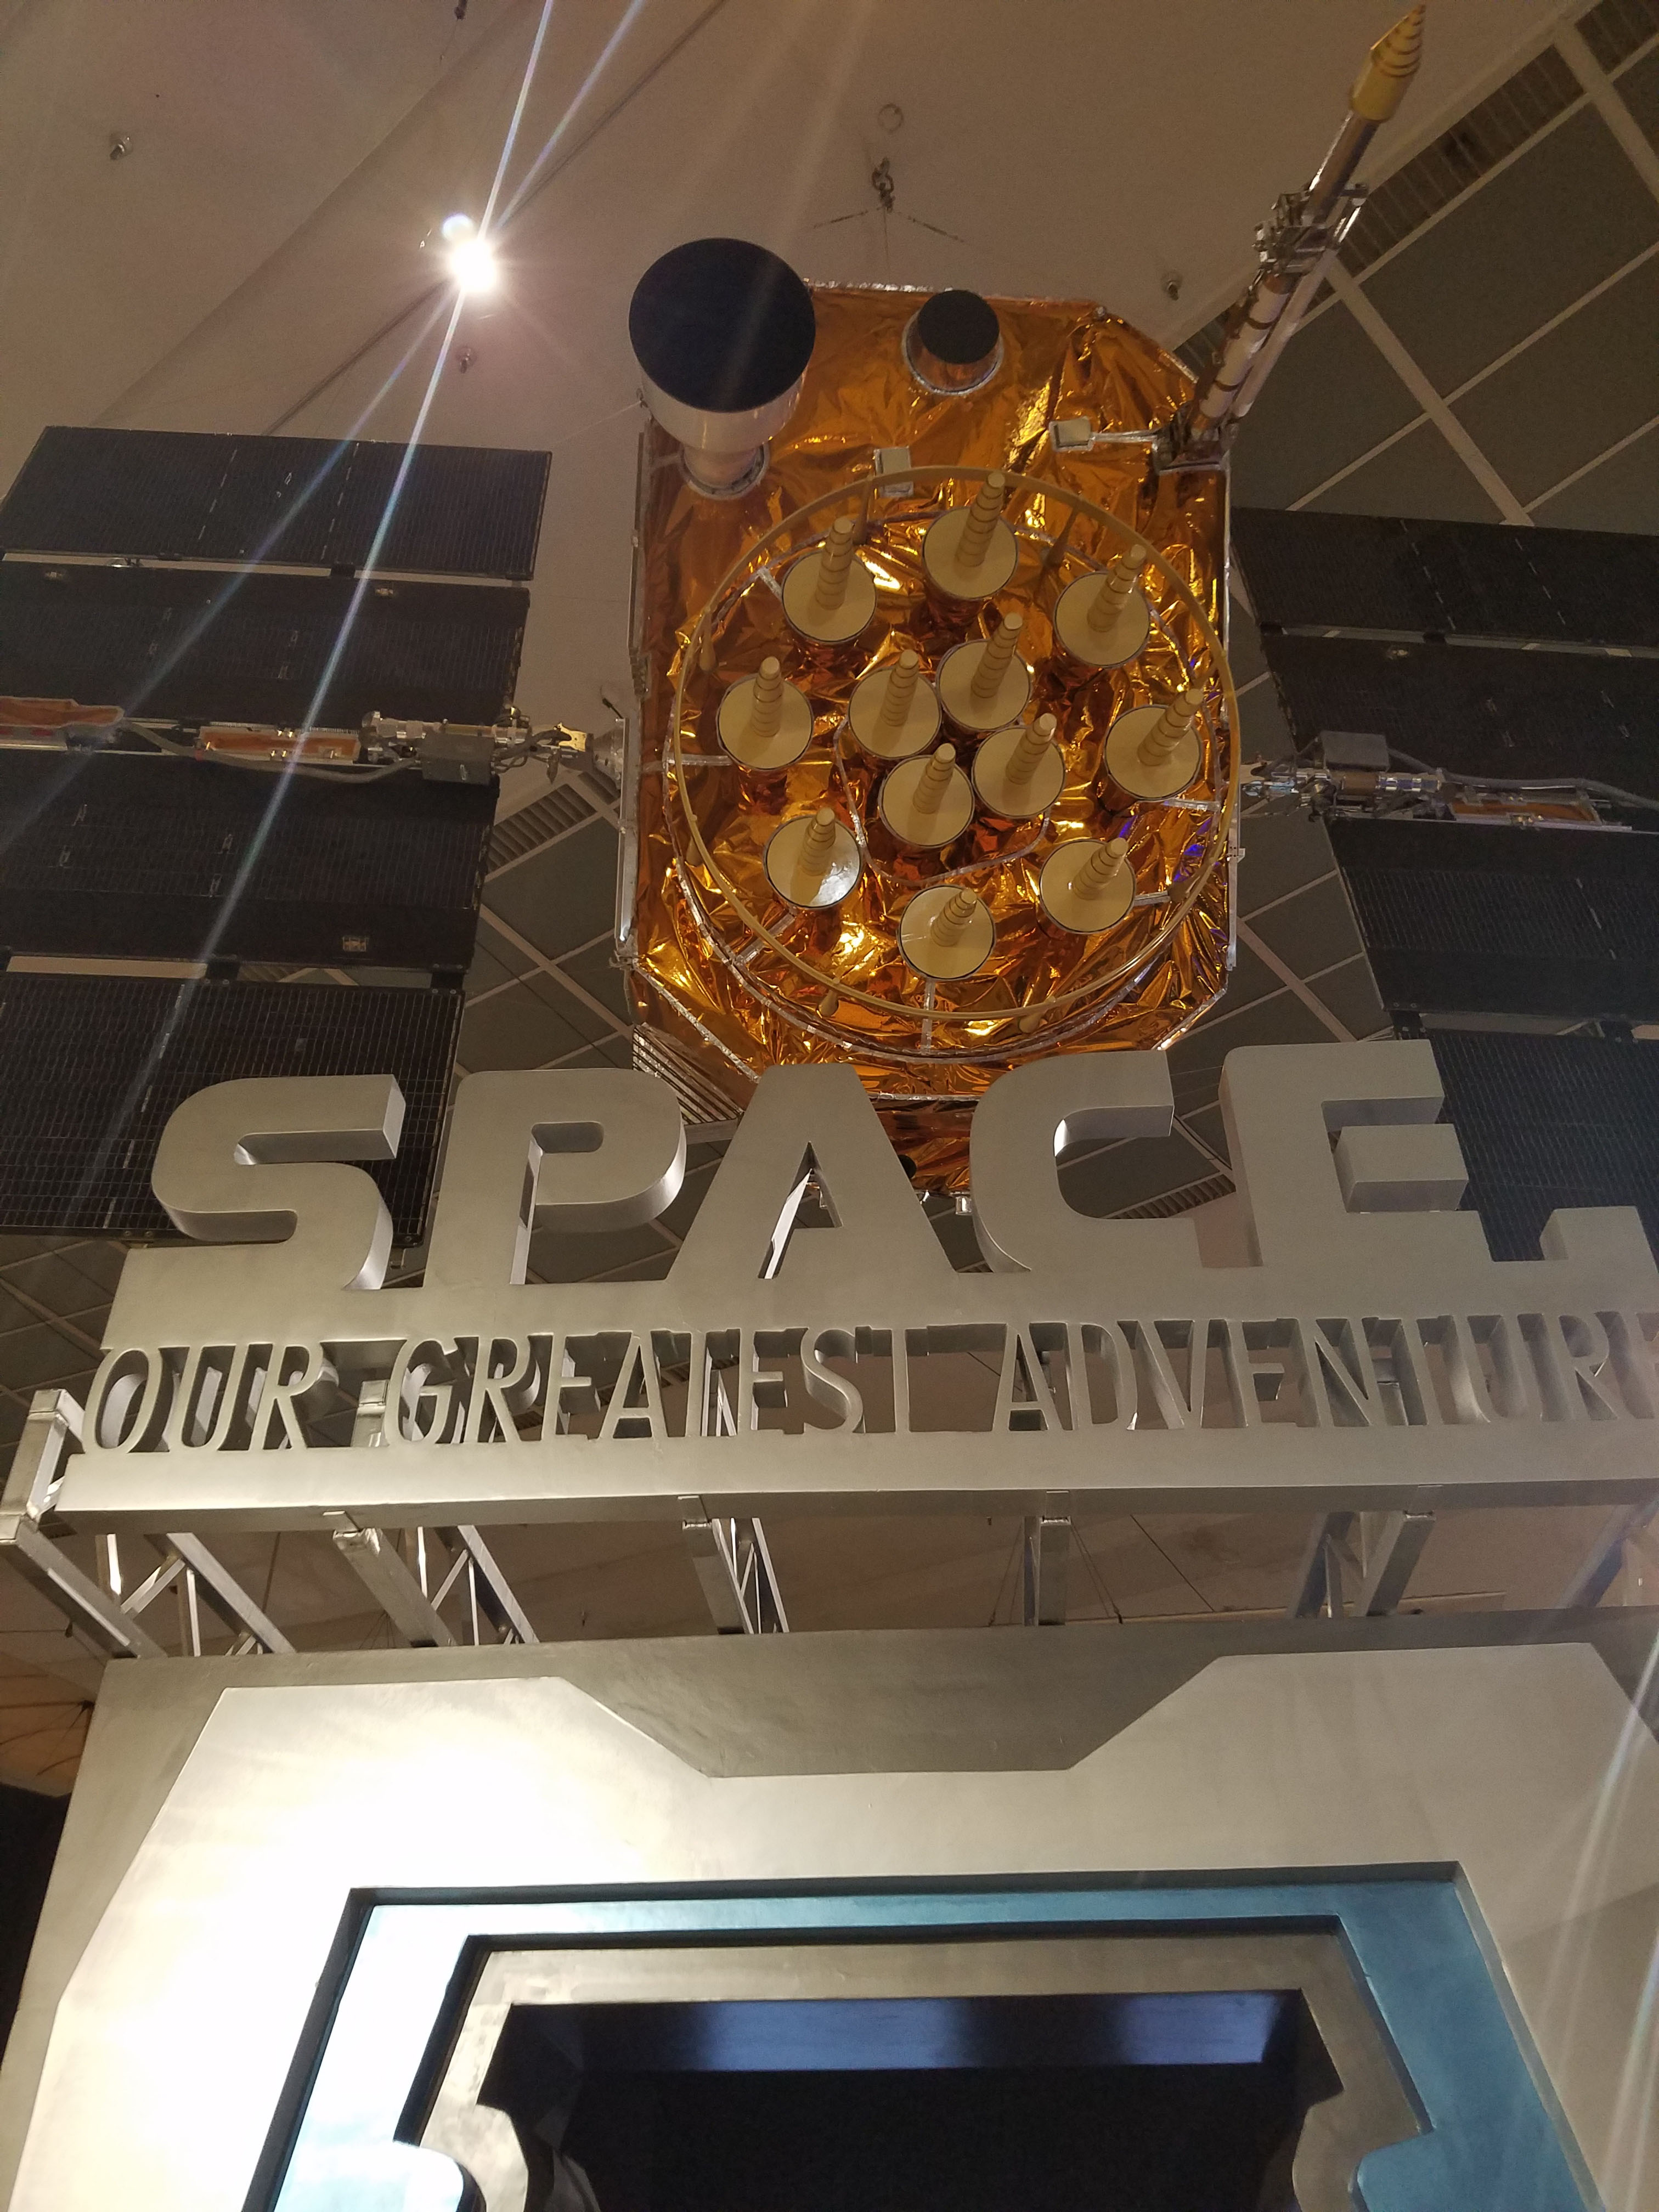 Space: Our Greatest Adventure Exhibit